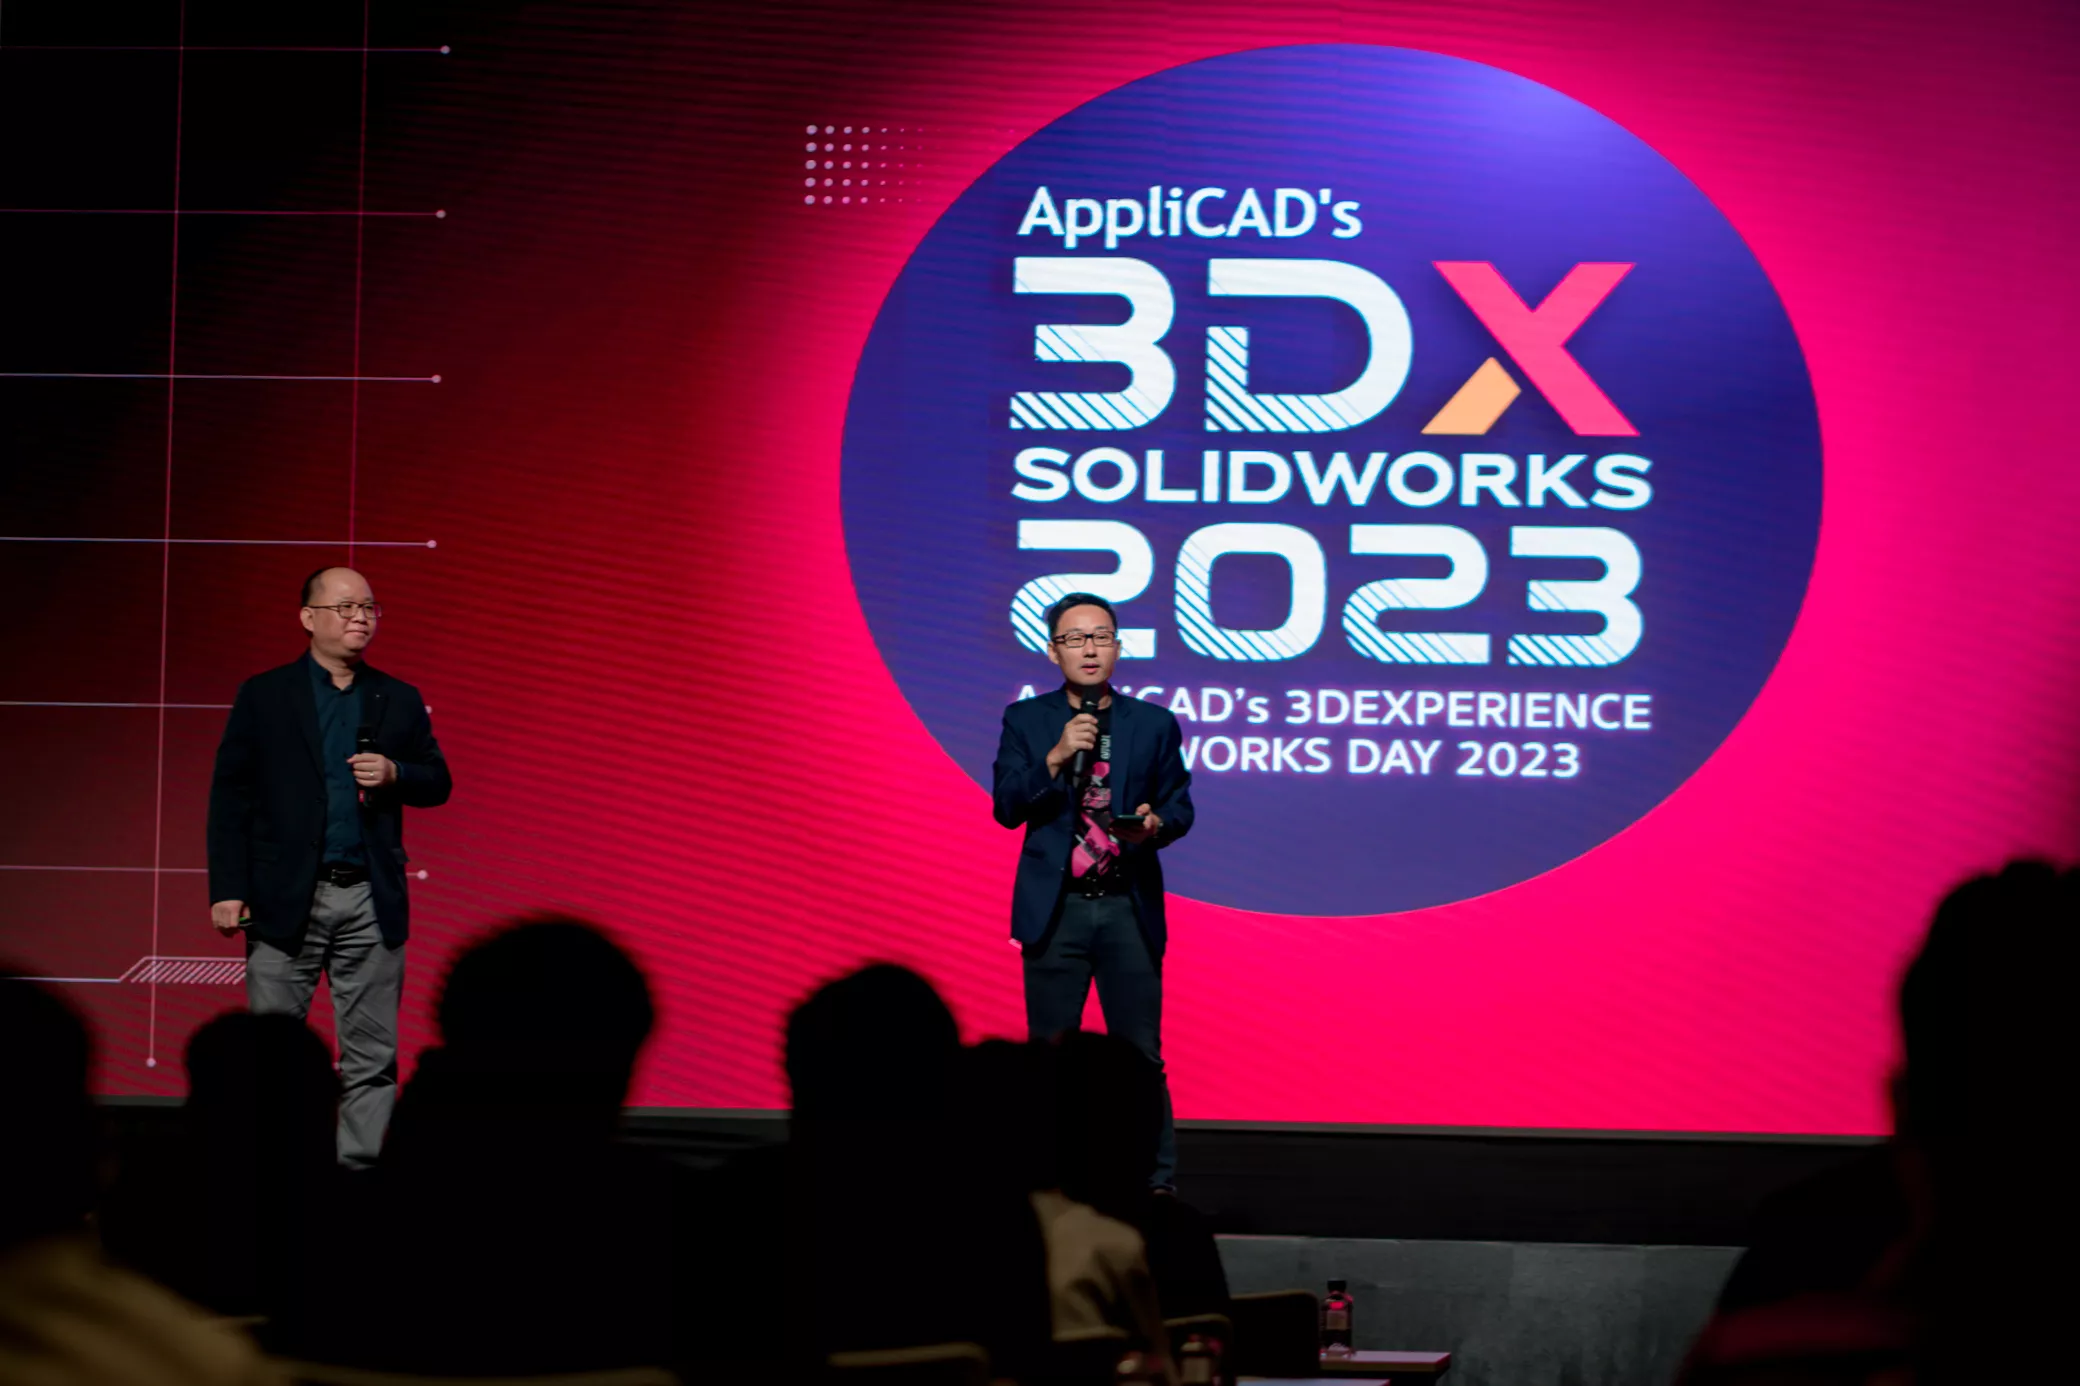 AppliCAD’s 3DEXPERIENCE SOLIDWORKS DAY 2023 ปิดฉาก…ยิ่งใหญ่! จัดเต็ม! 